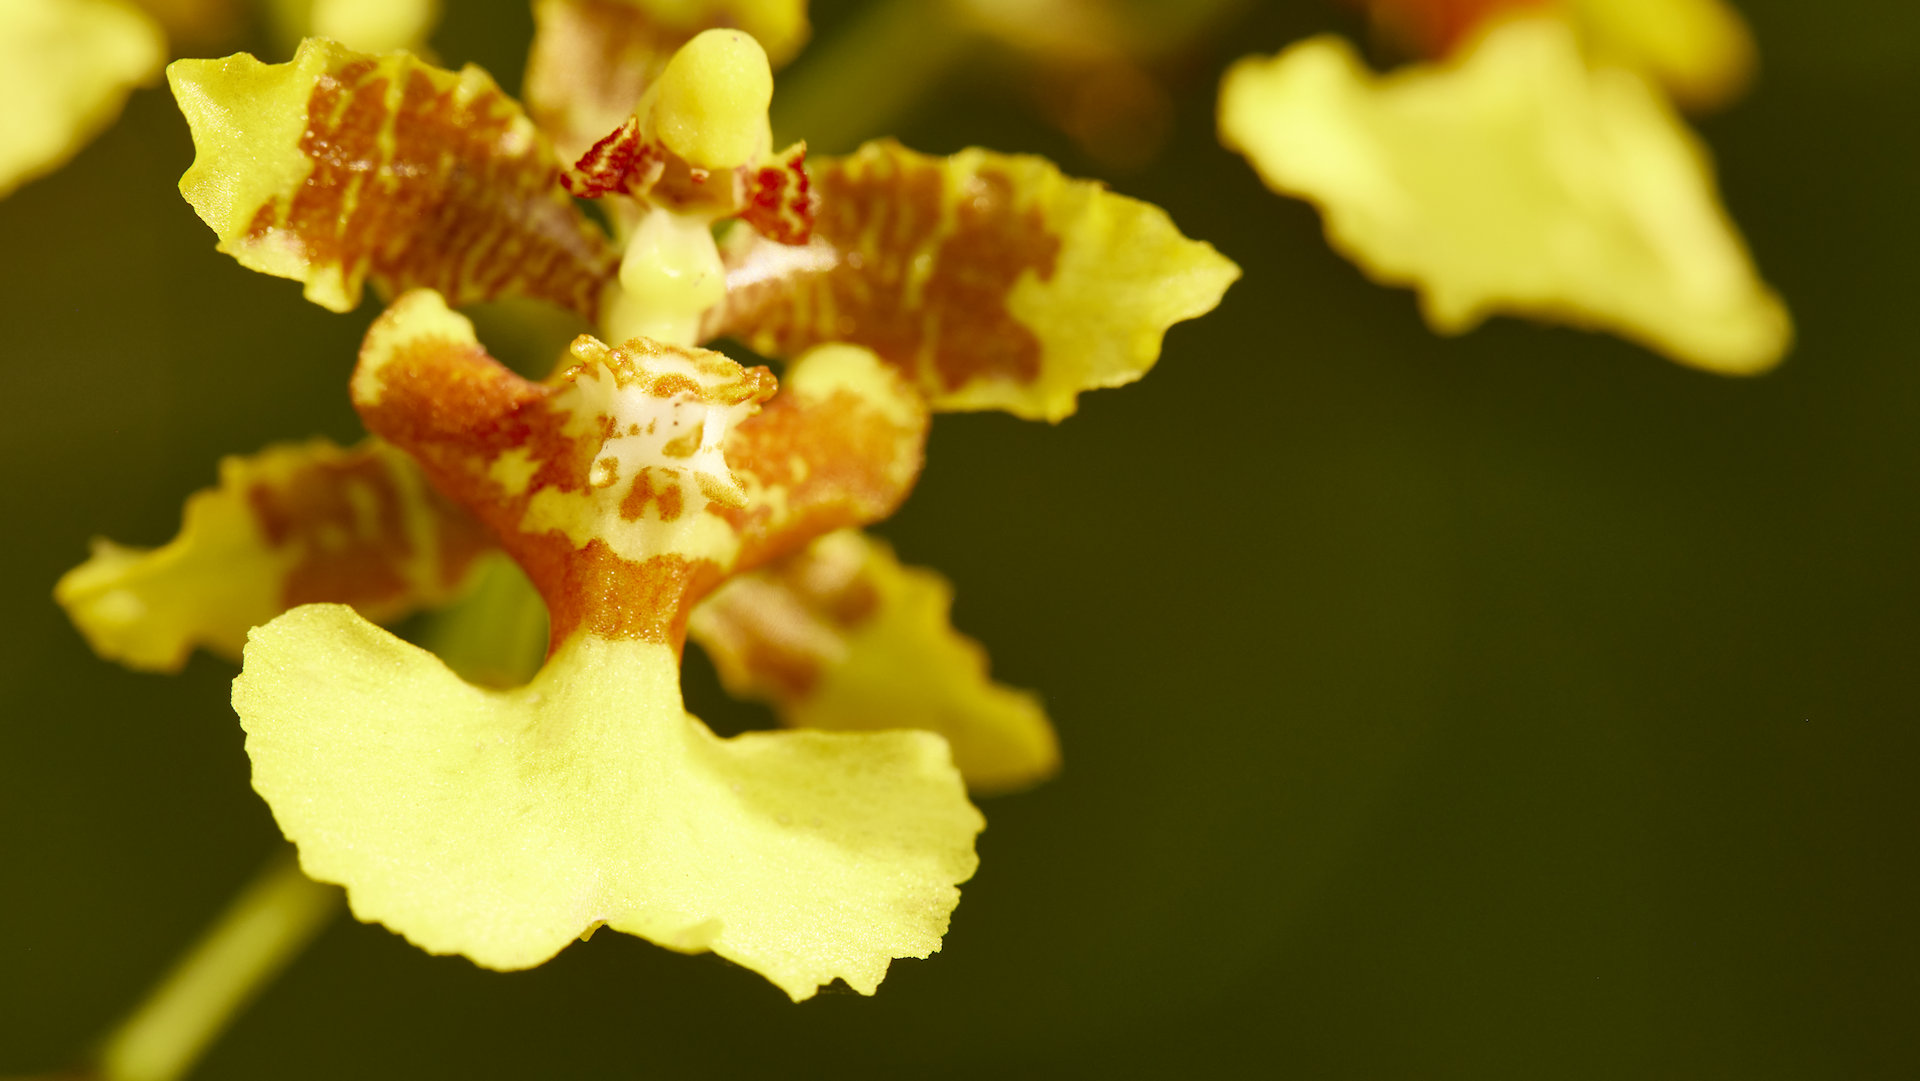 Orchid golden shower (about 1cm across) - image 13